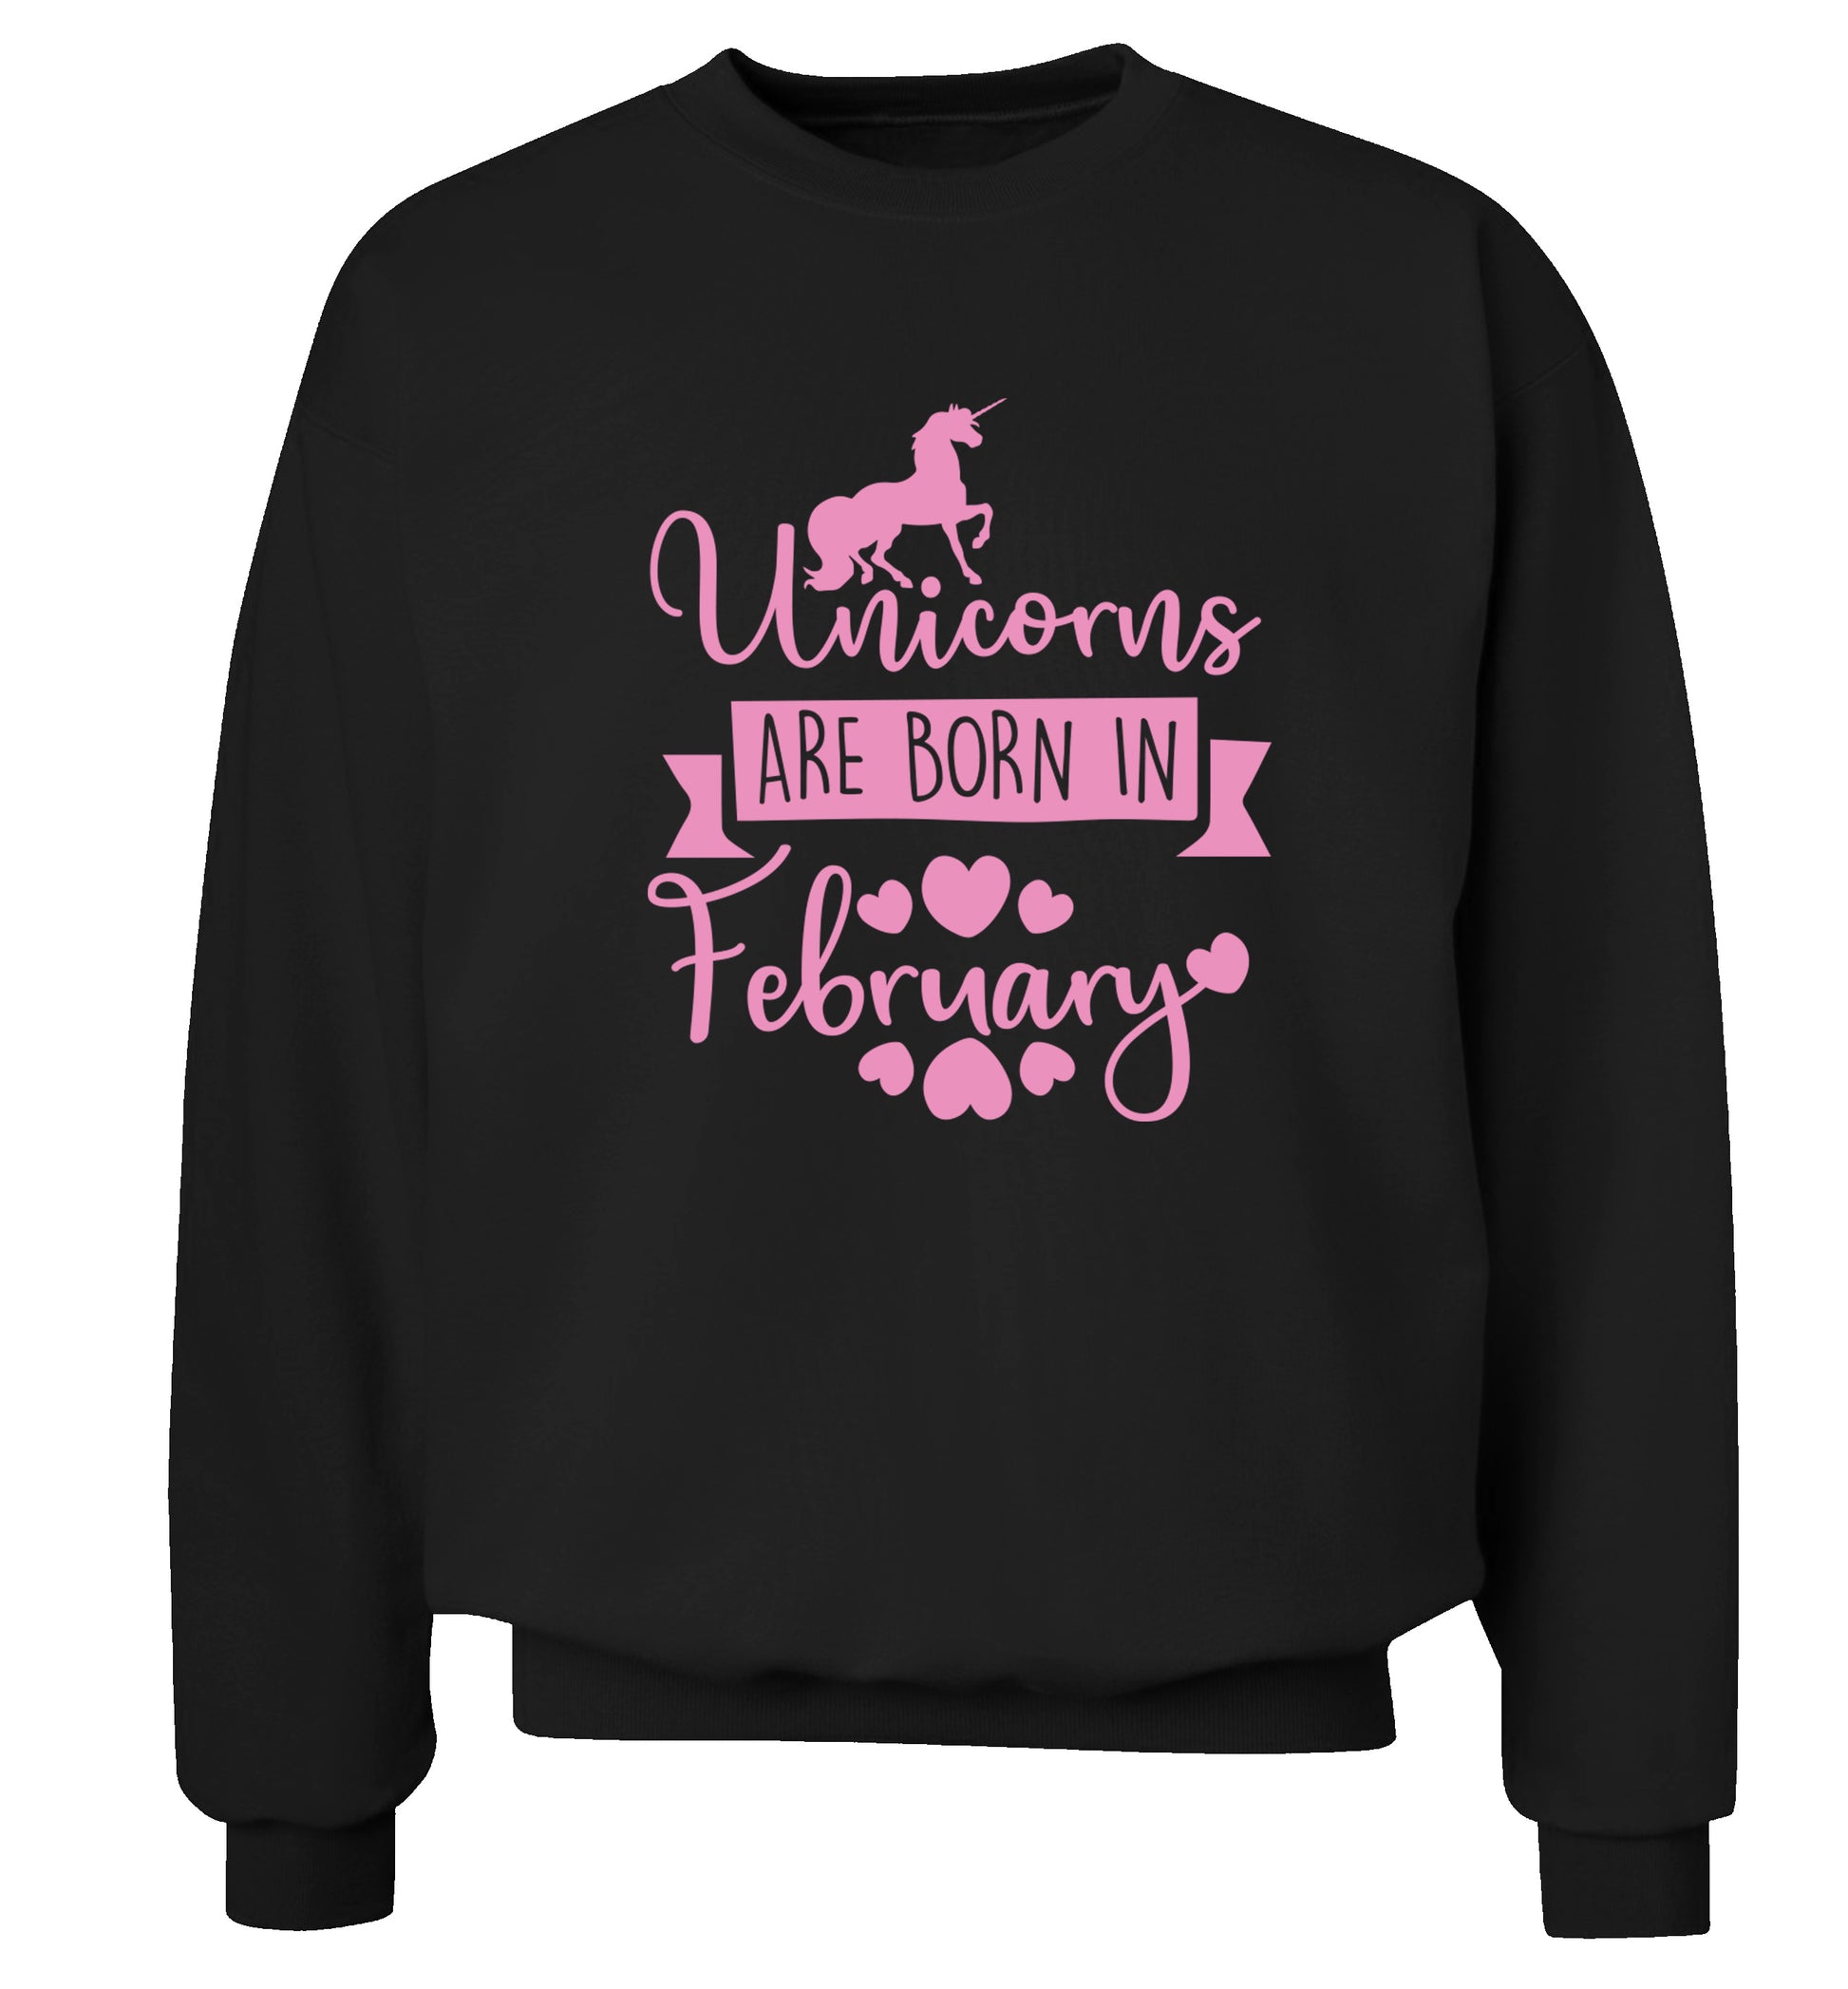 Unicorns are born in February Adult's unisex black Sweater 2XL